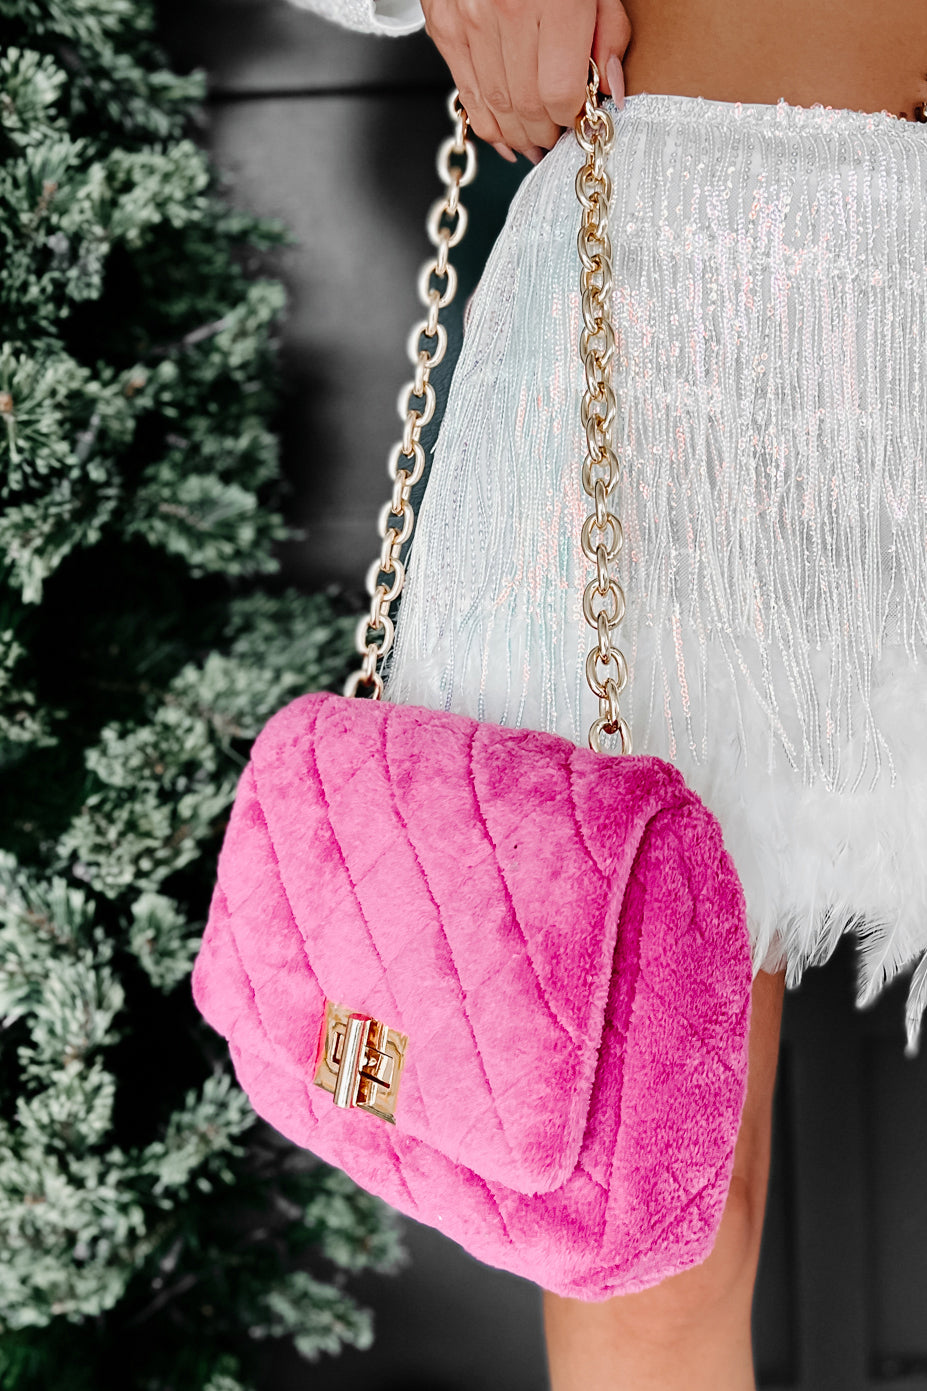 Chanel Medium Shearling 19 Flap Bag - Pink Shoulder Bags, Handbags